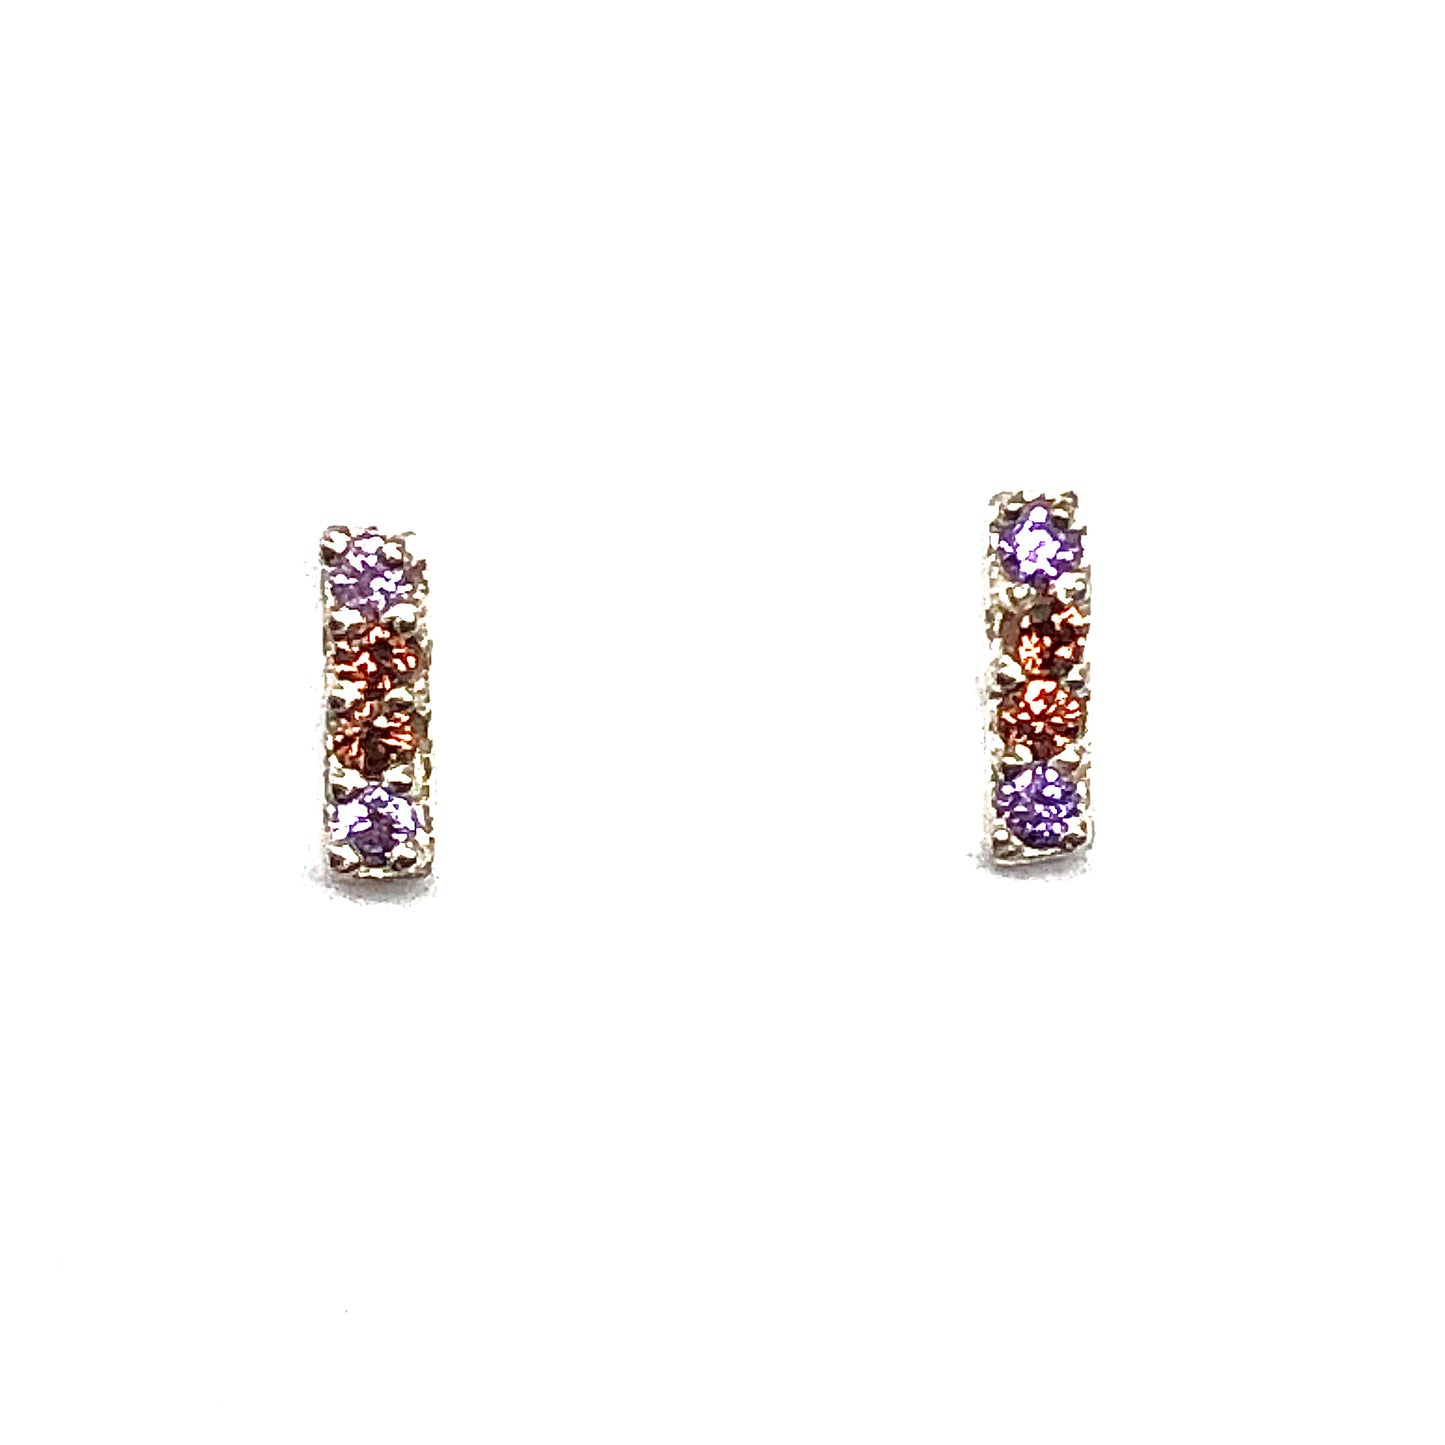 Minimalist to the Max Sterling Silver Bar Stud Earrings - Blingschlingers Jewelry online